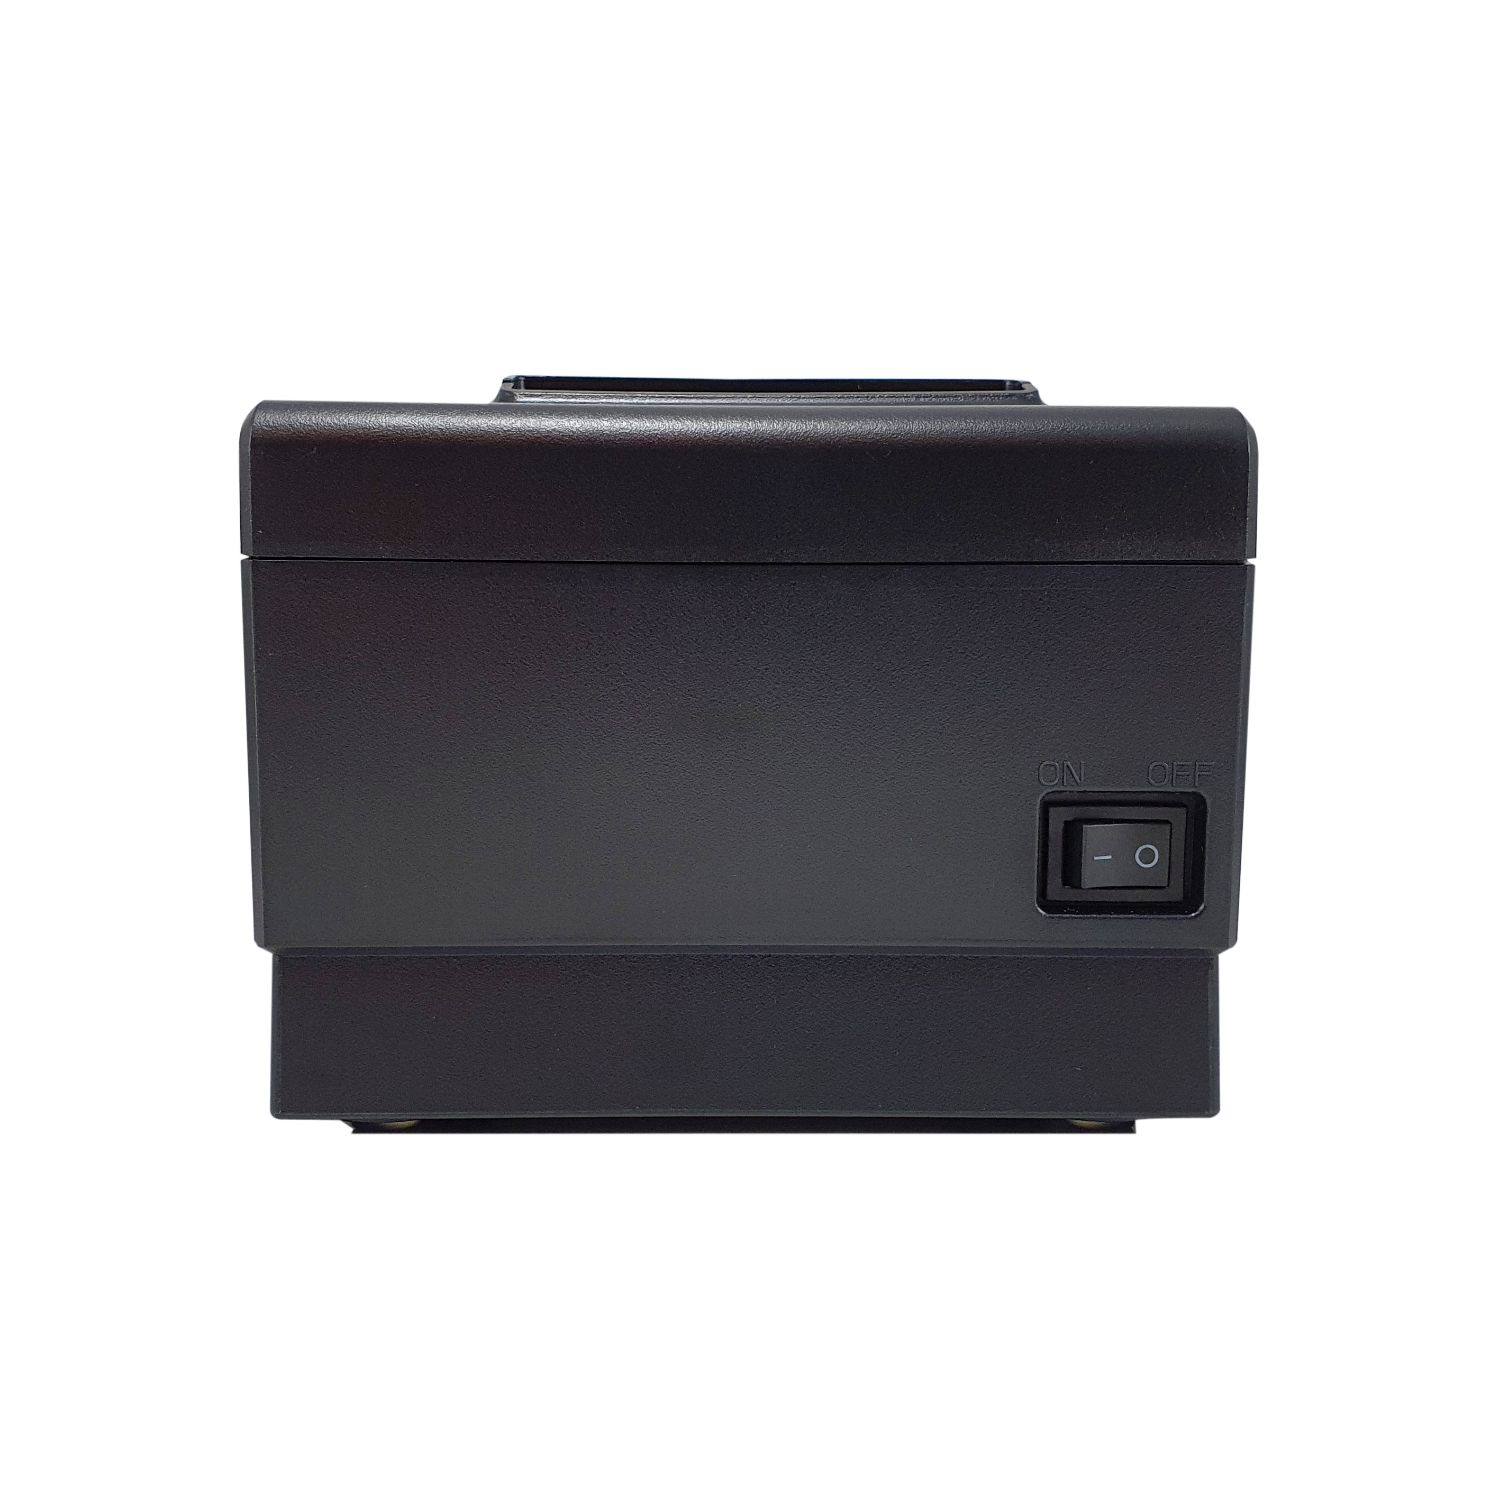 EQ351002 - Impresora Trmica EQUIP 80mm 203x203dpi USB-B 2.0 RJ11 Corte Manual/Automtico Negra (EQ351002)